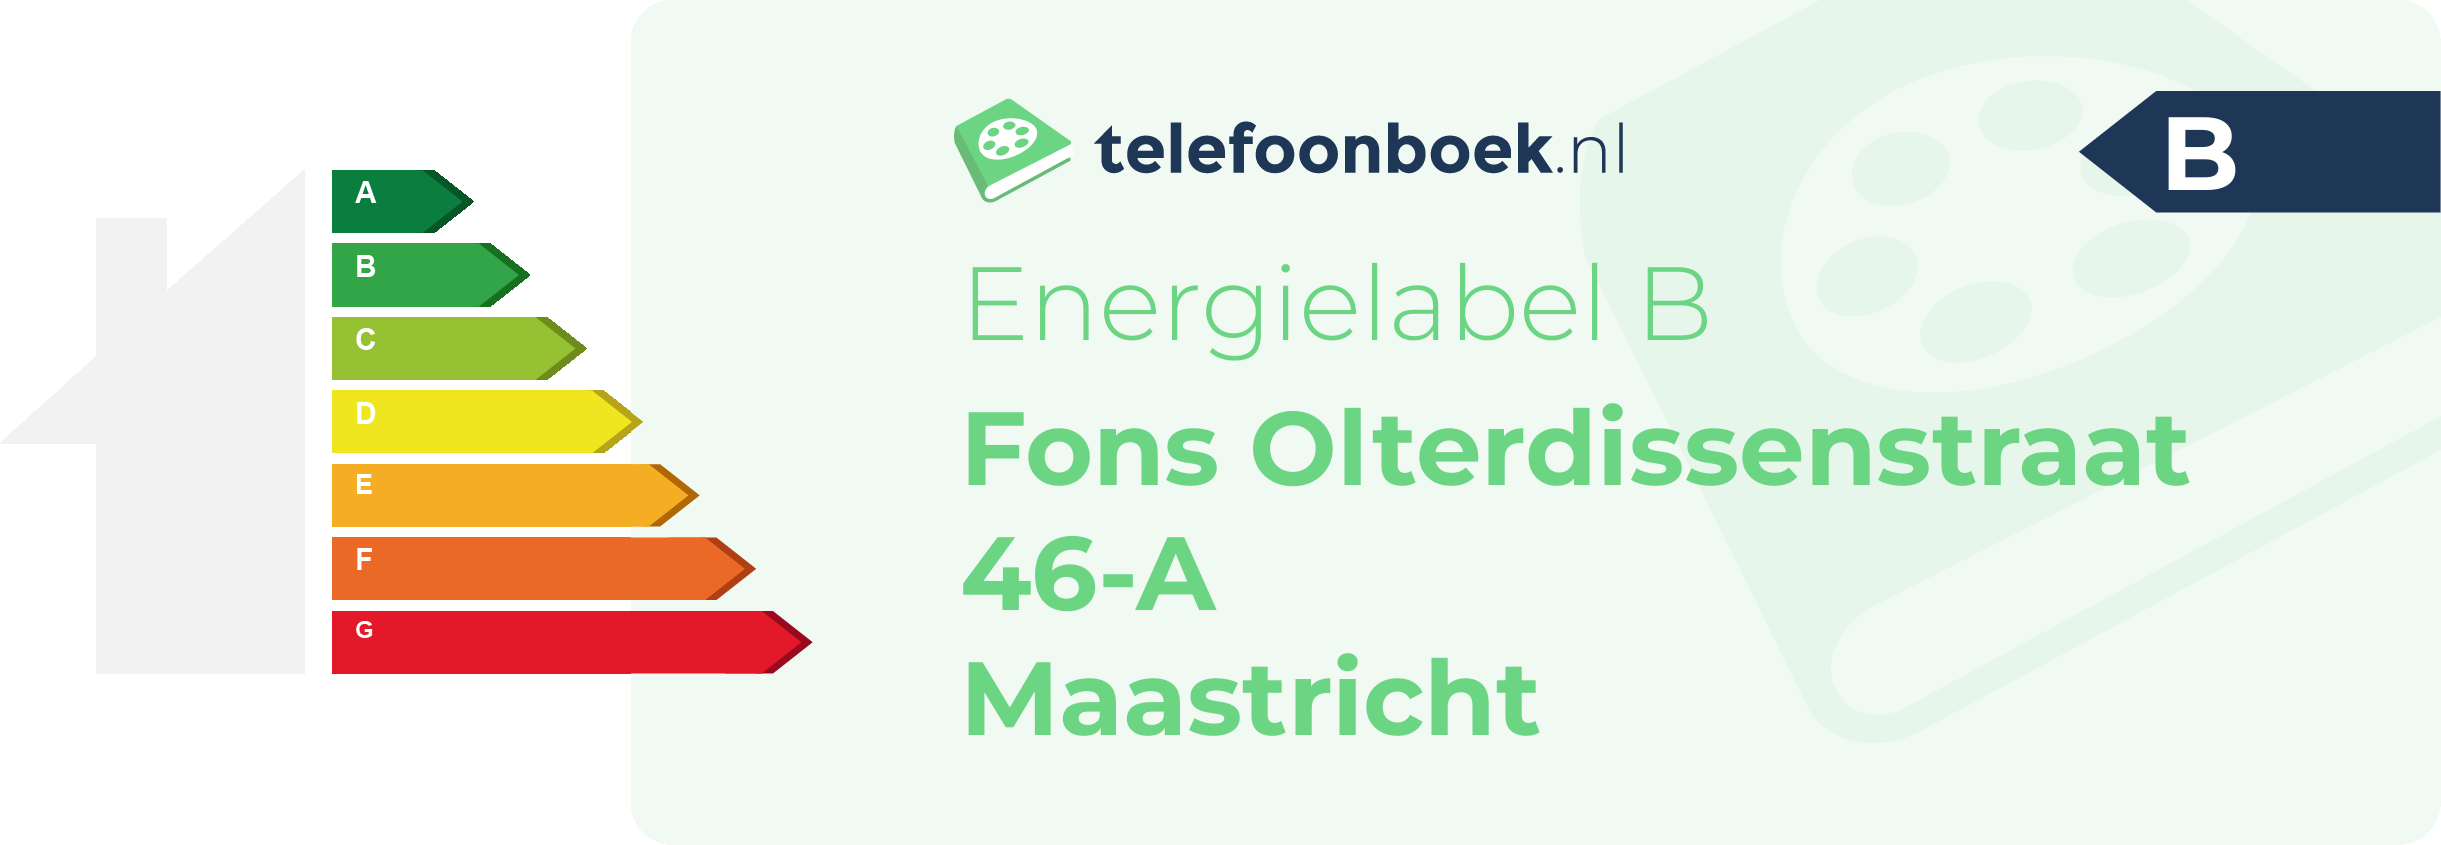 Energielabel Fons Olterdissenstraat 46-A Maastricht